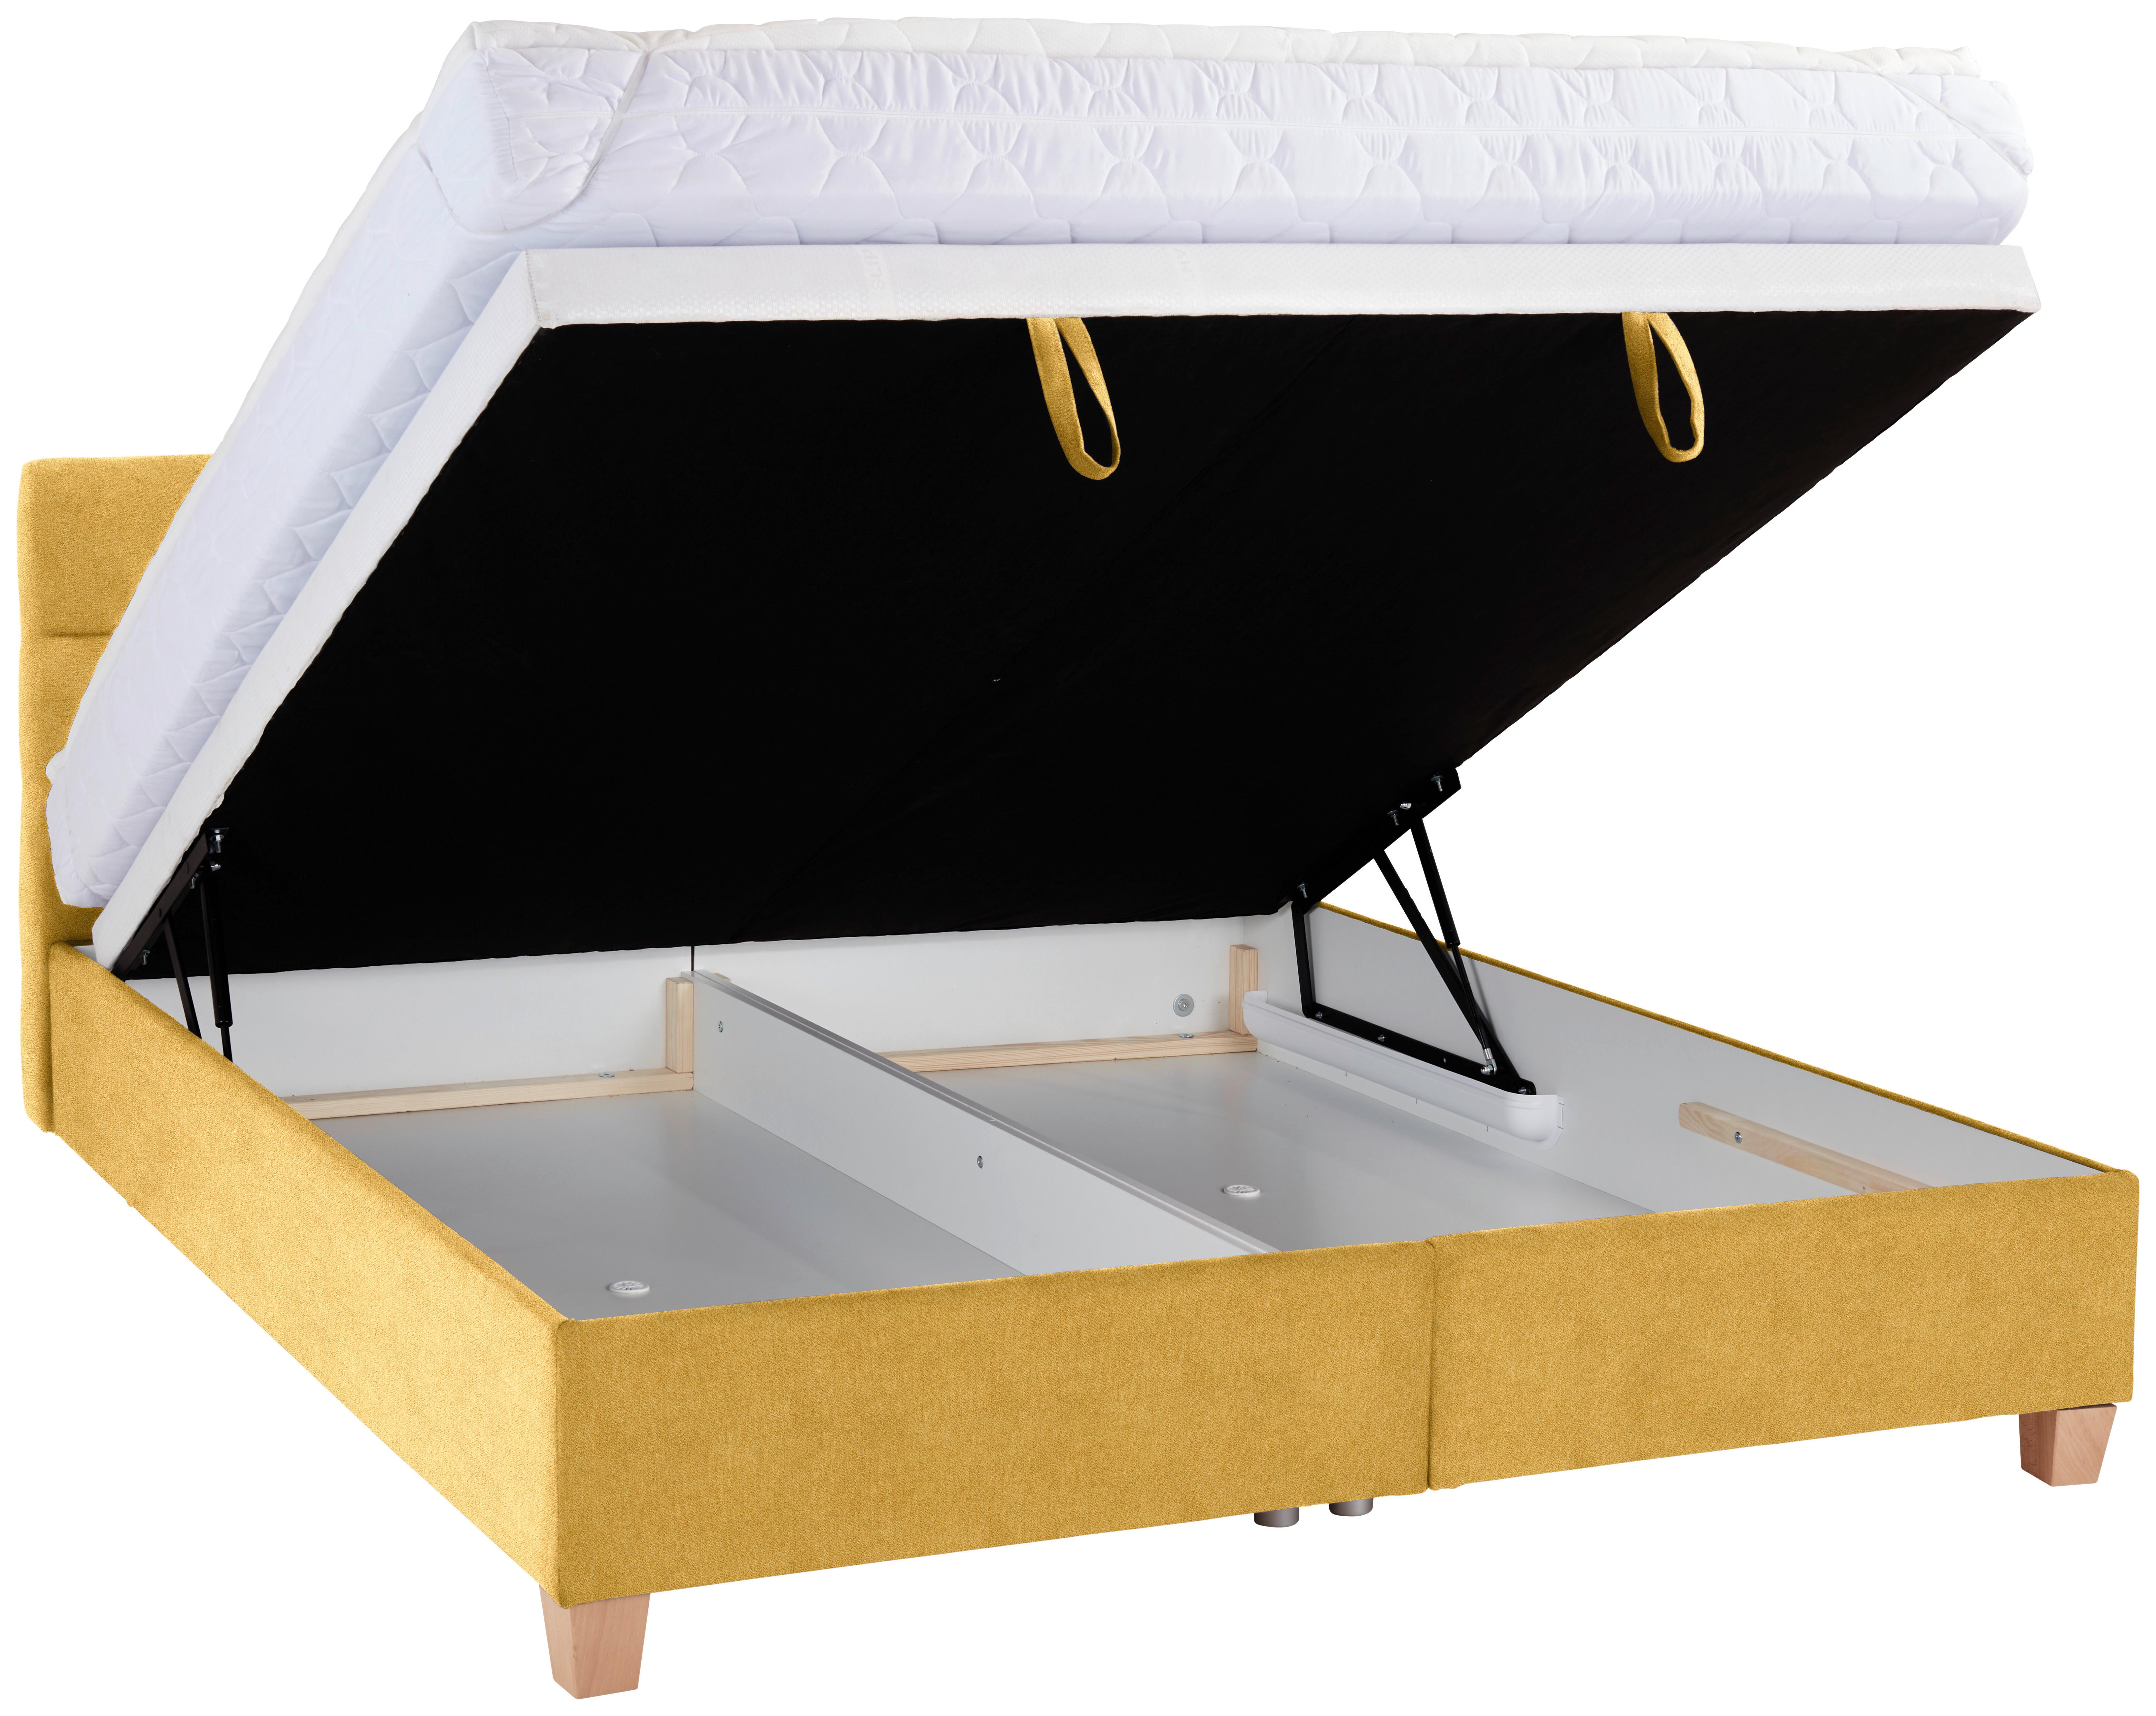 Čalouněná Postel Bellagio 160x200cm, Potah Hořčicový - bílá/barvy buku, Konvenční, dřevo (140/200cm)